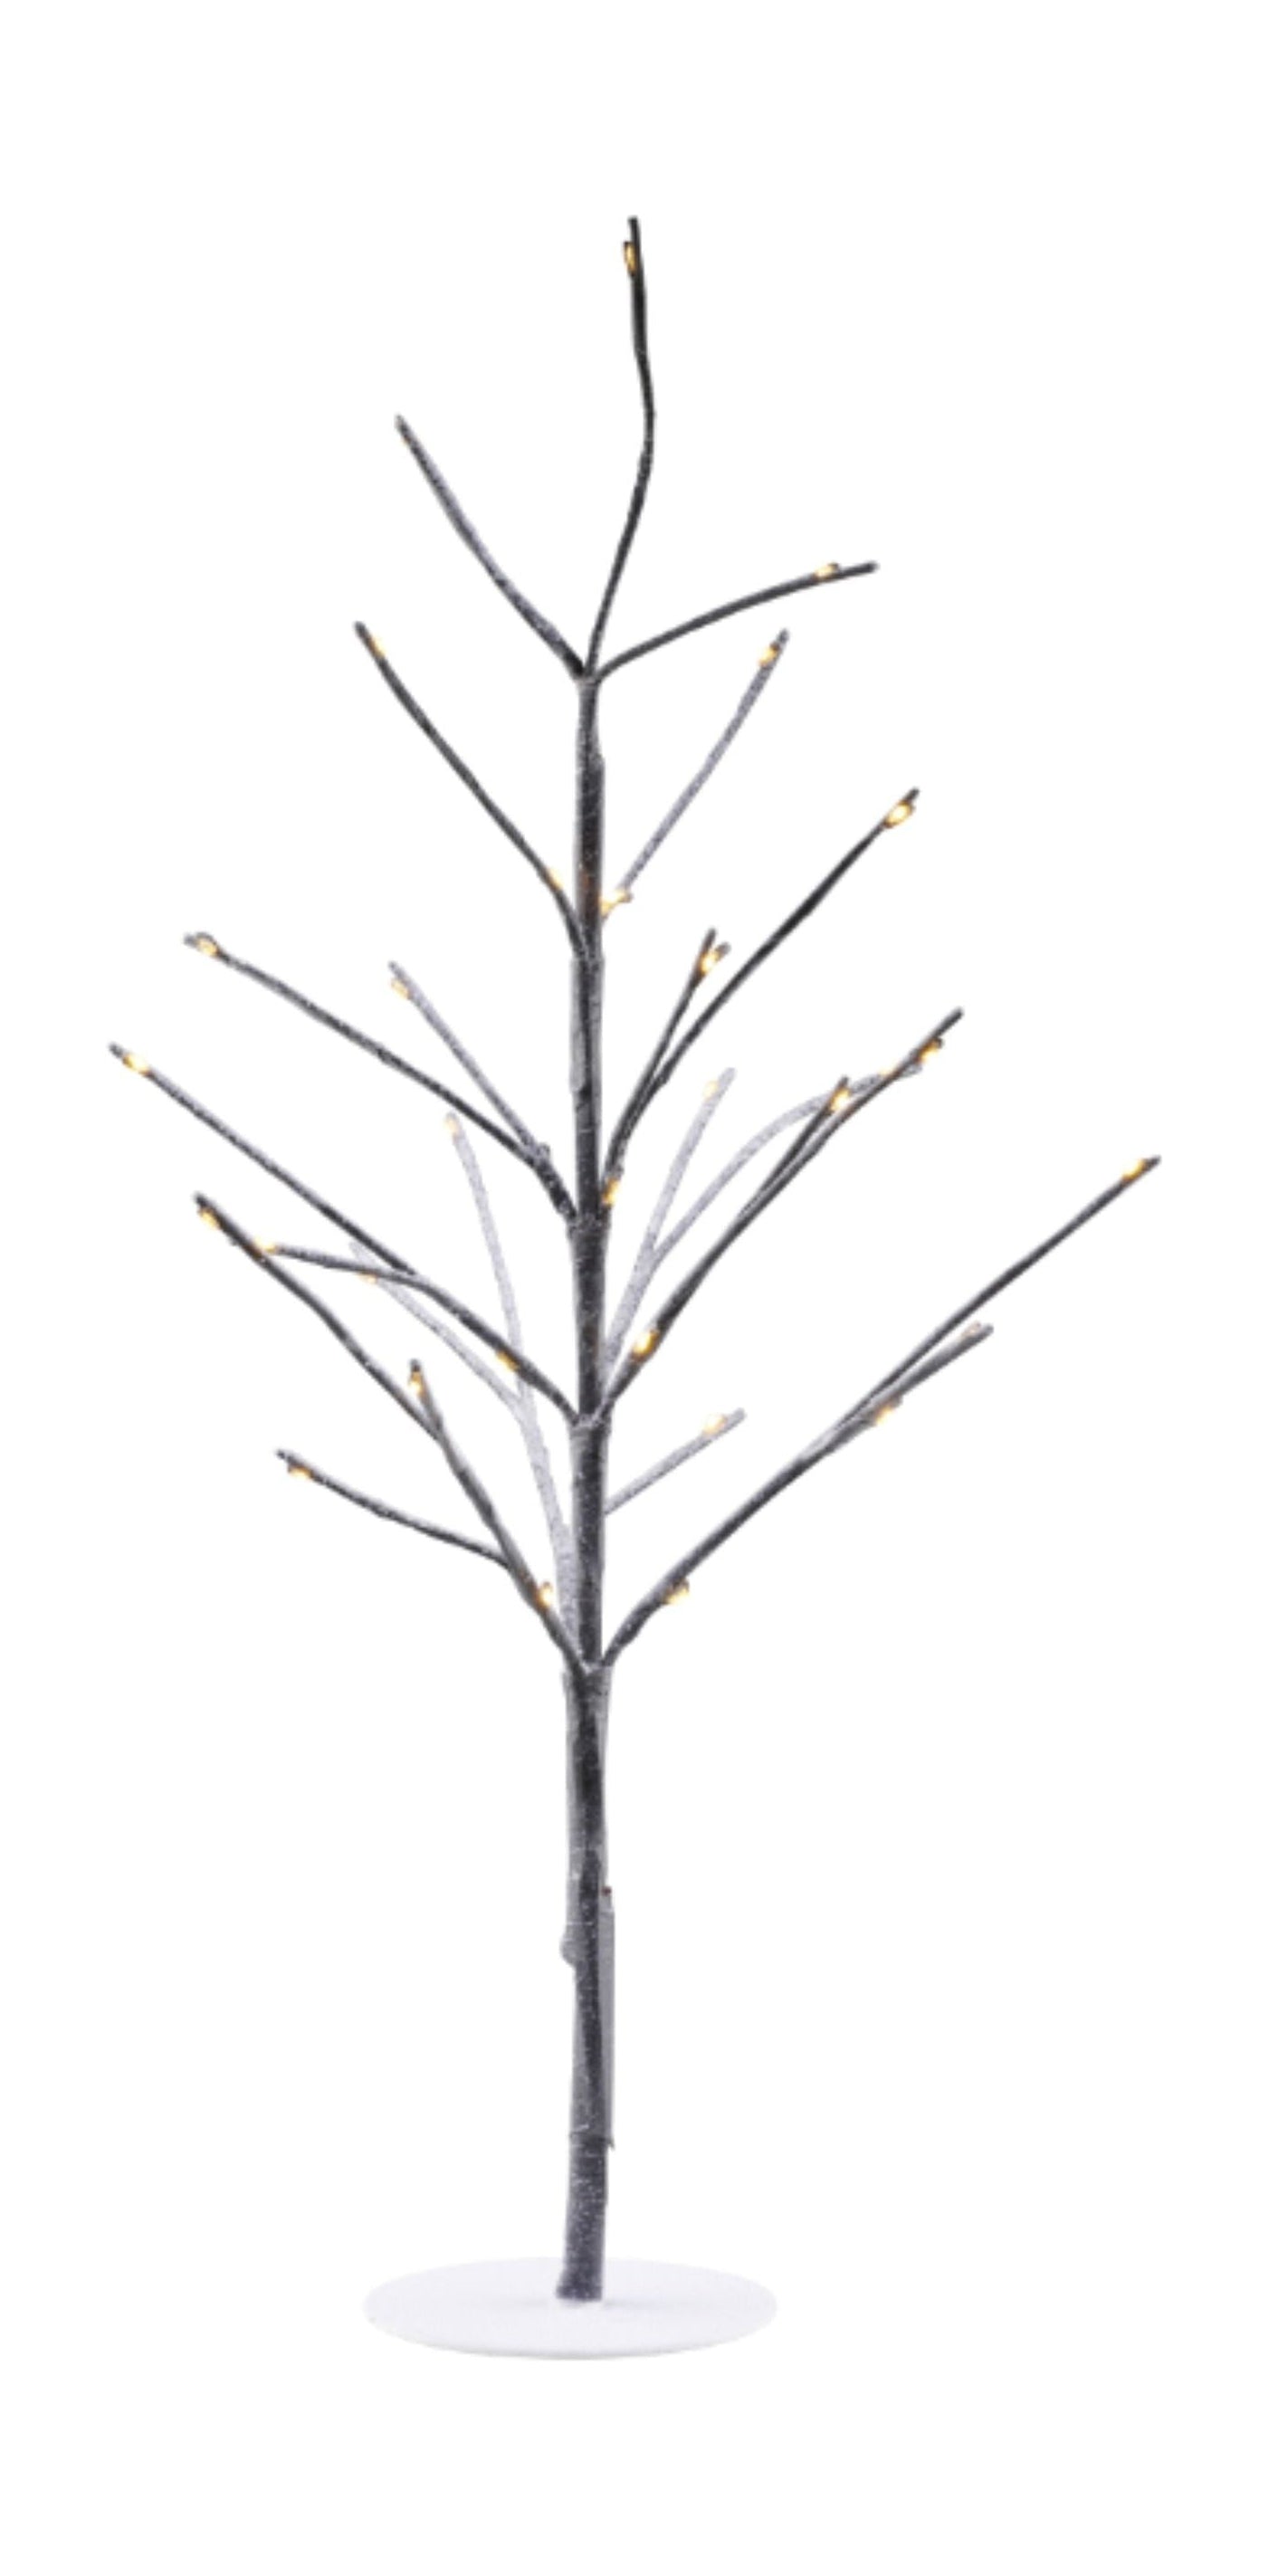 Sirius Kira Tree H50cm, brun / blanc enneigé